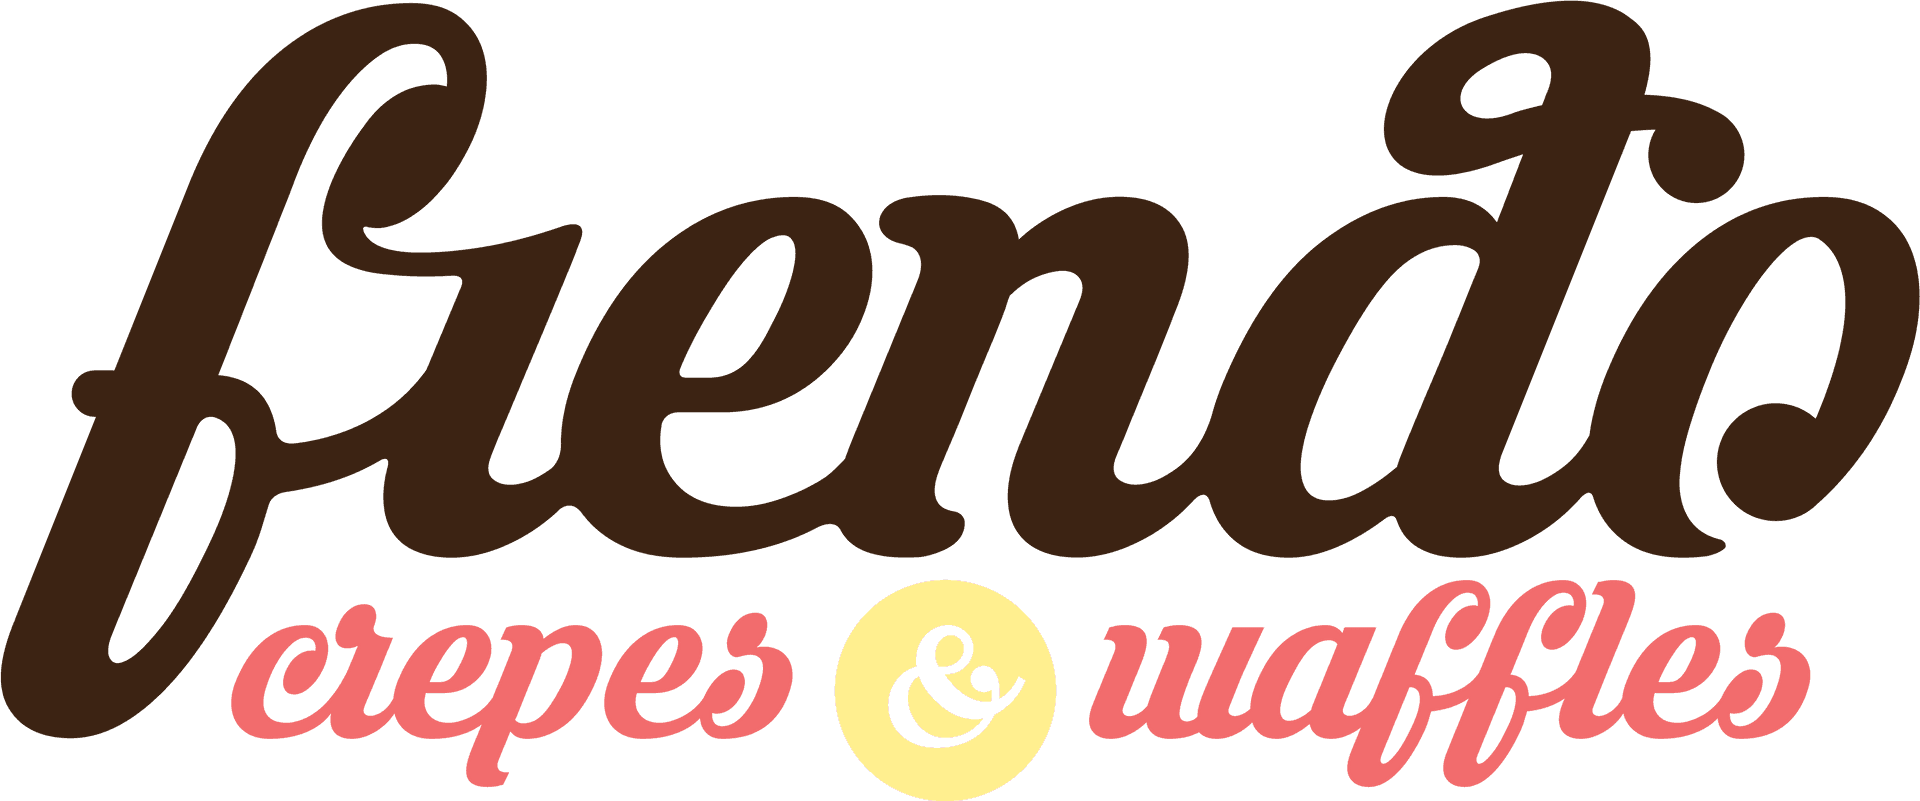 Crepes And Waffles Logo PNG image